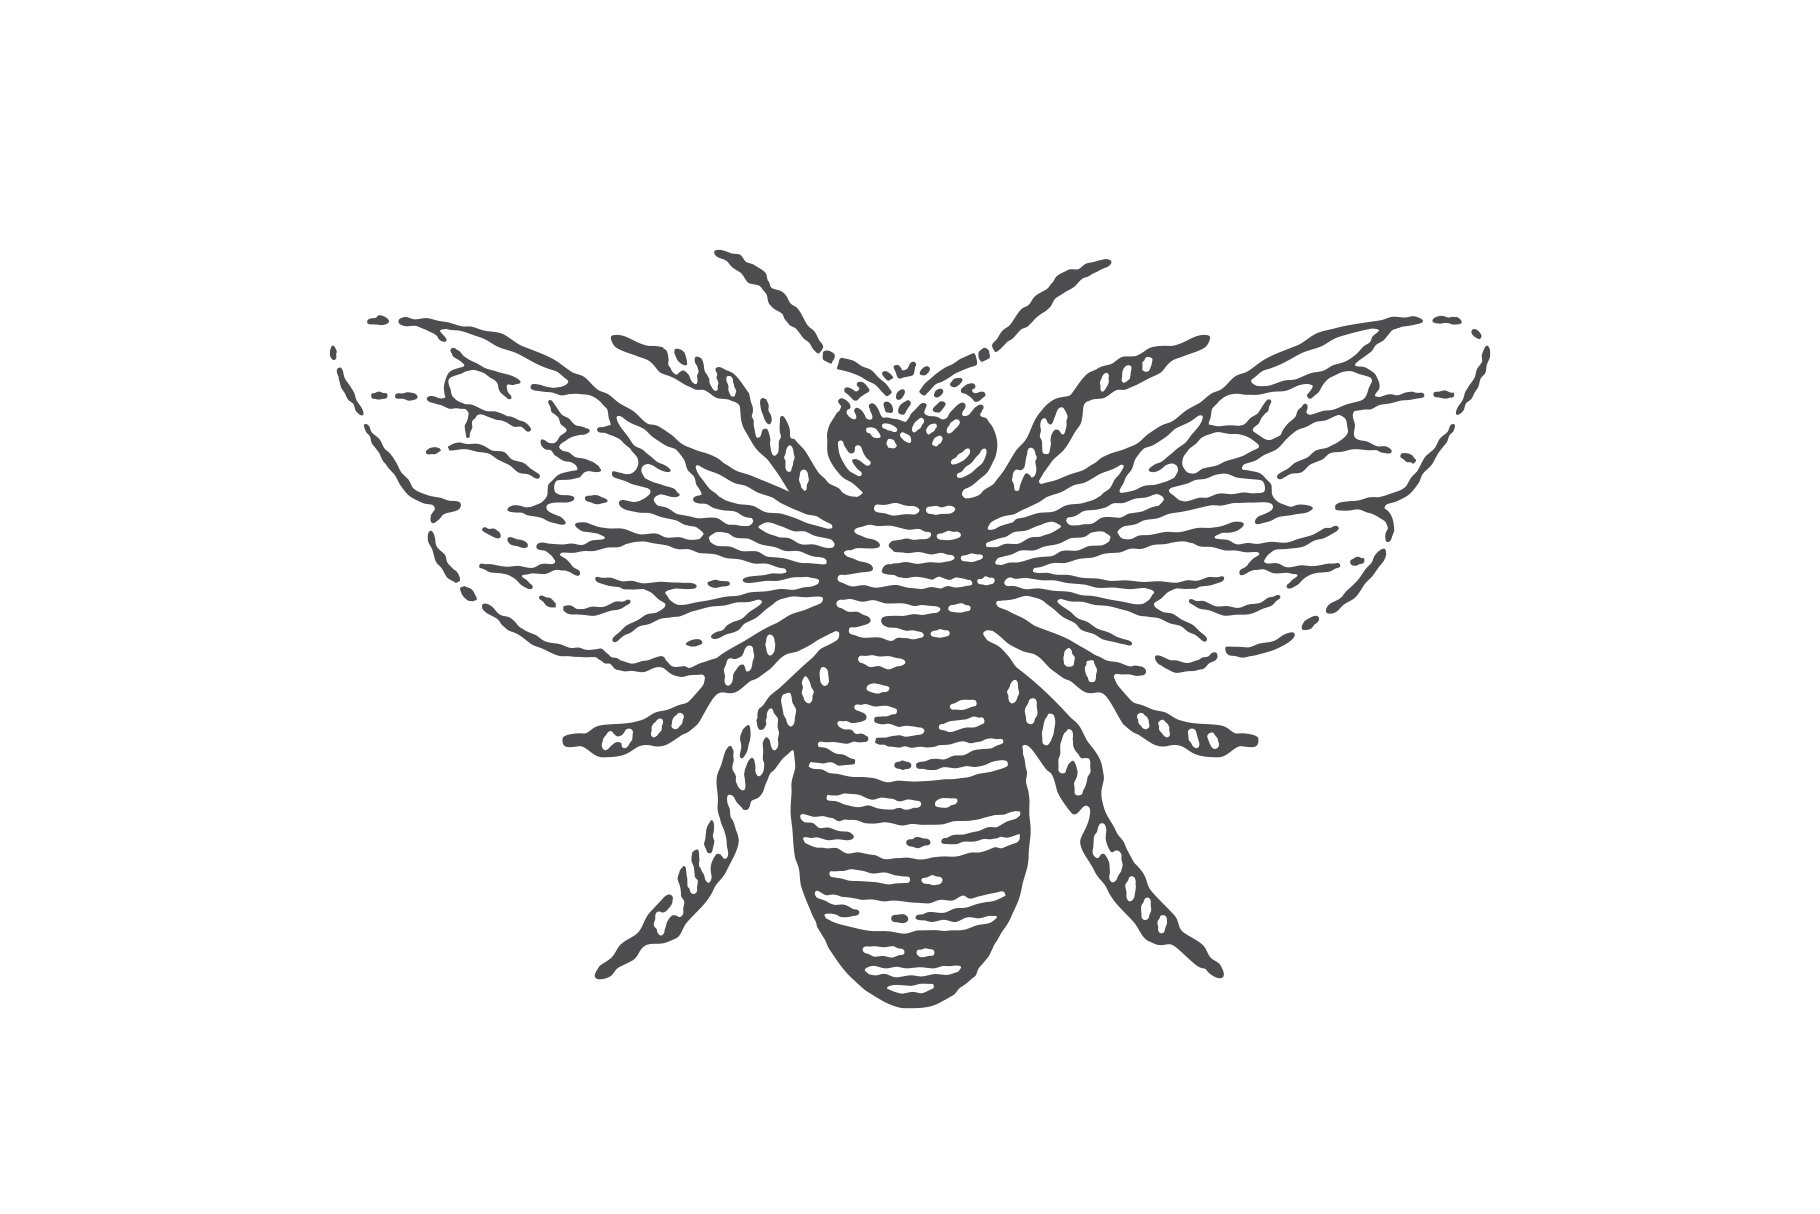 Honey bee cover image.